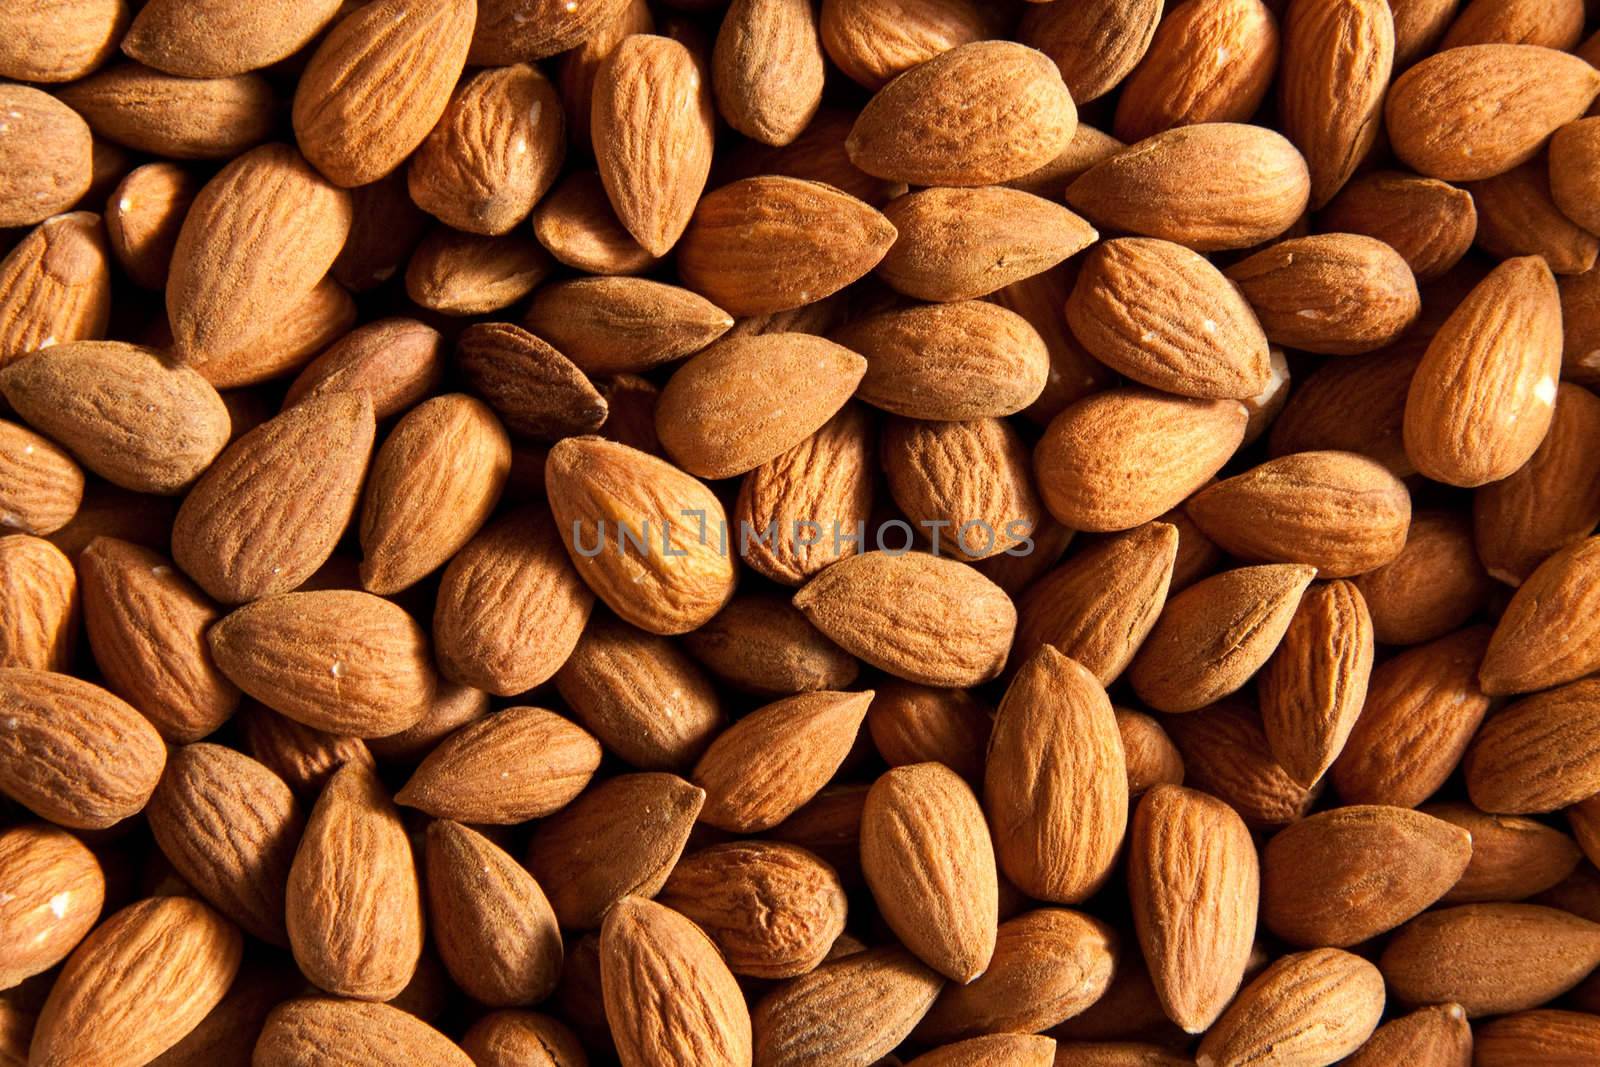 Almonds  by raliand